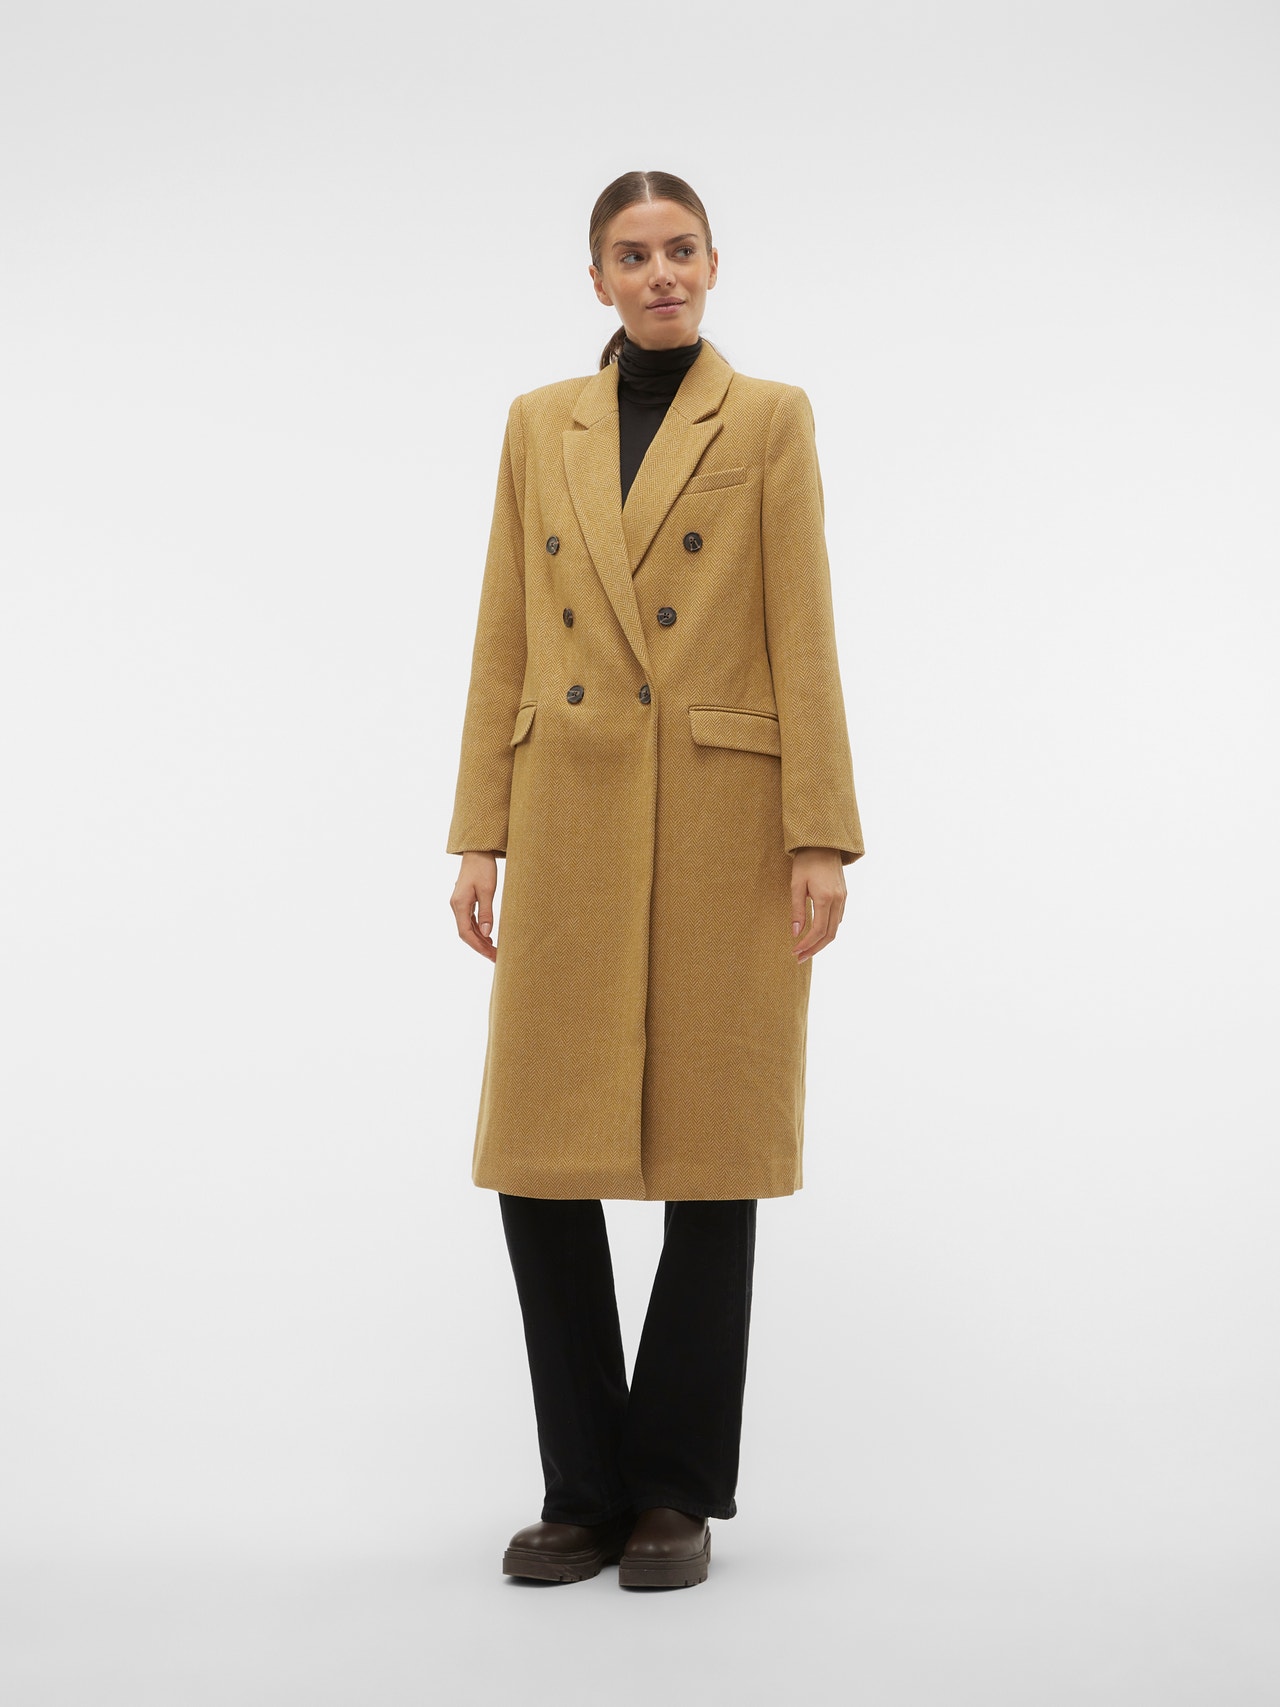 Vero Moda VMANNA Coat -Misted Yellow - 10310247